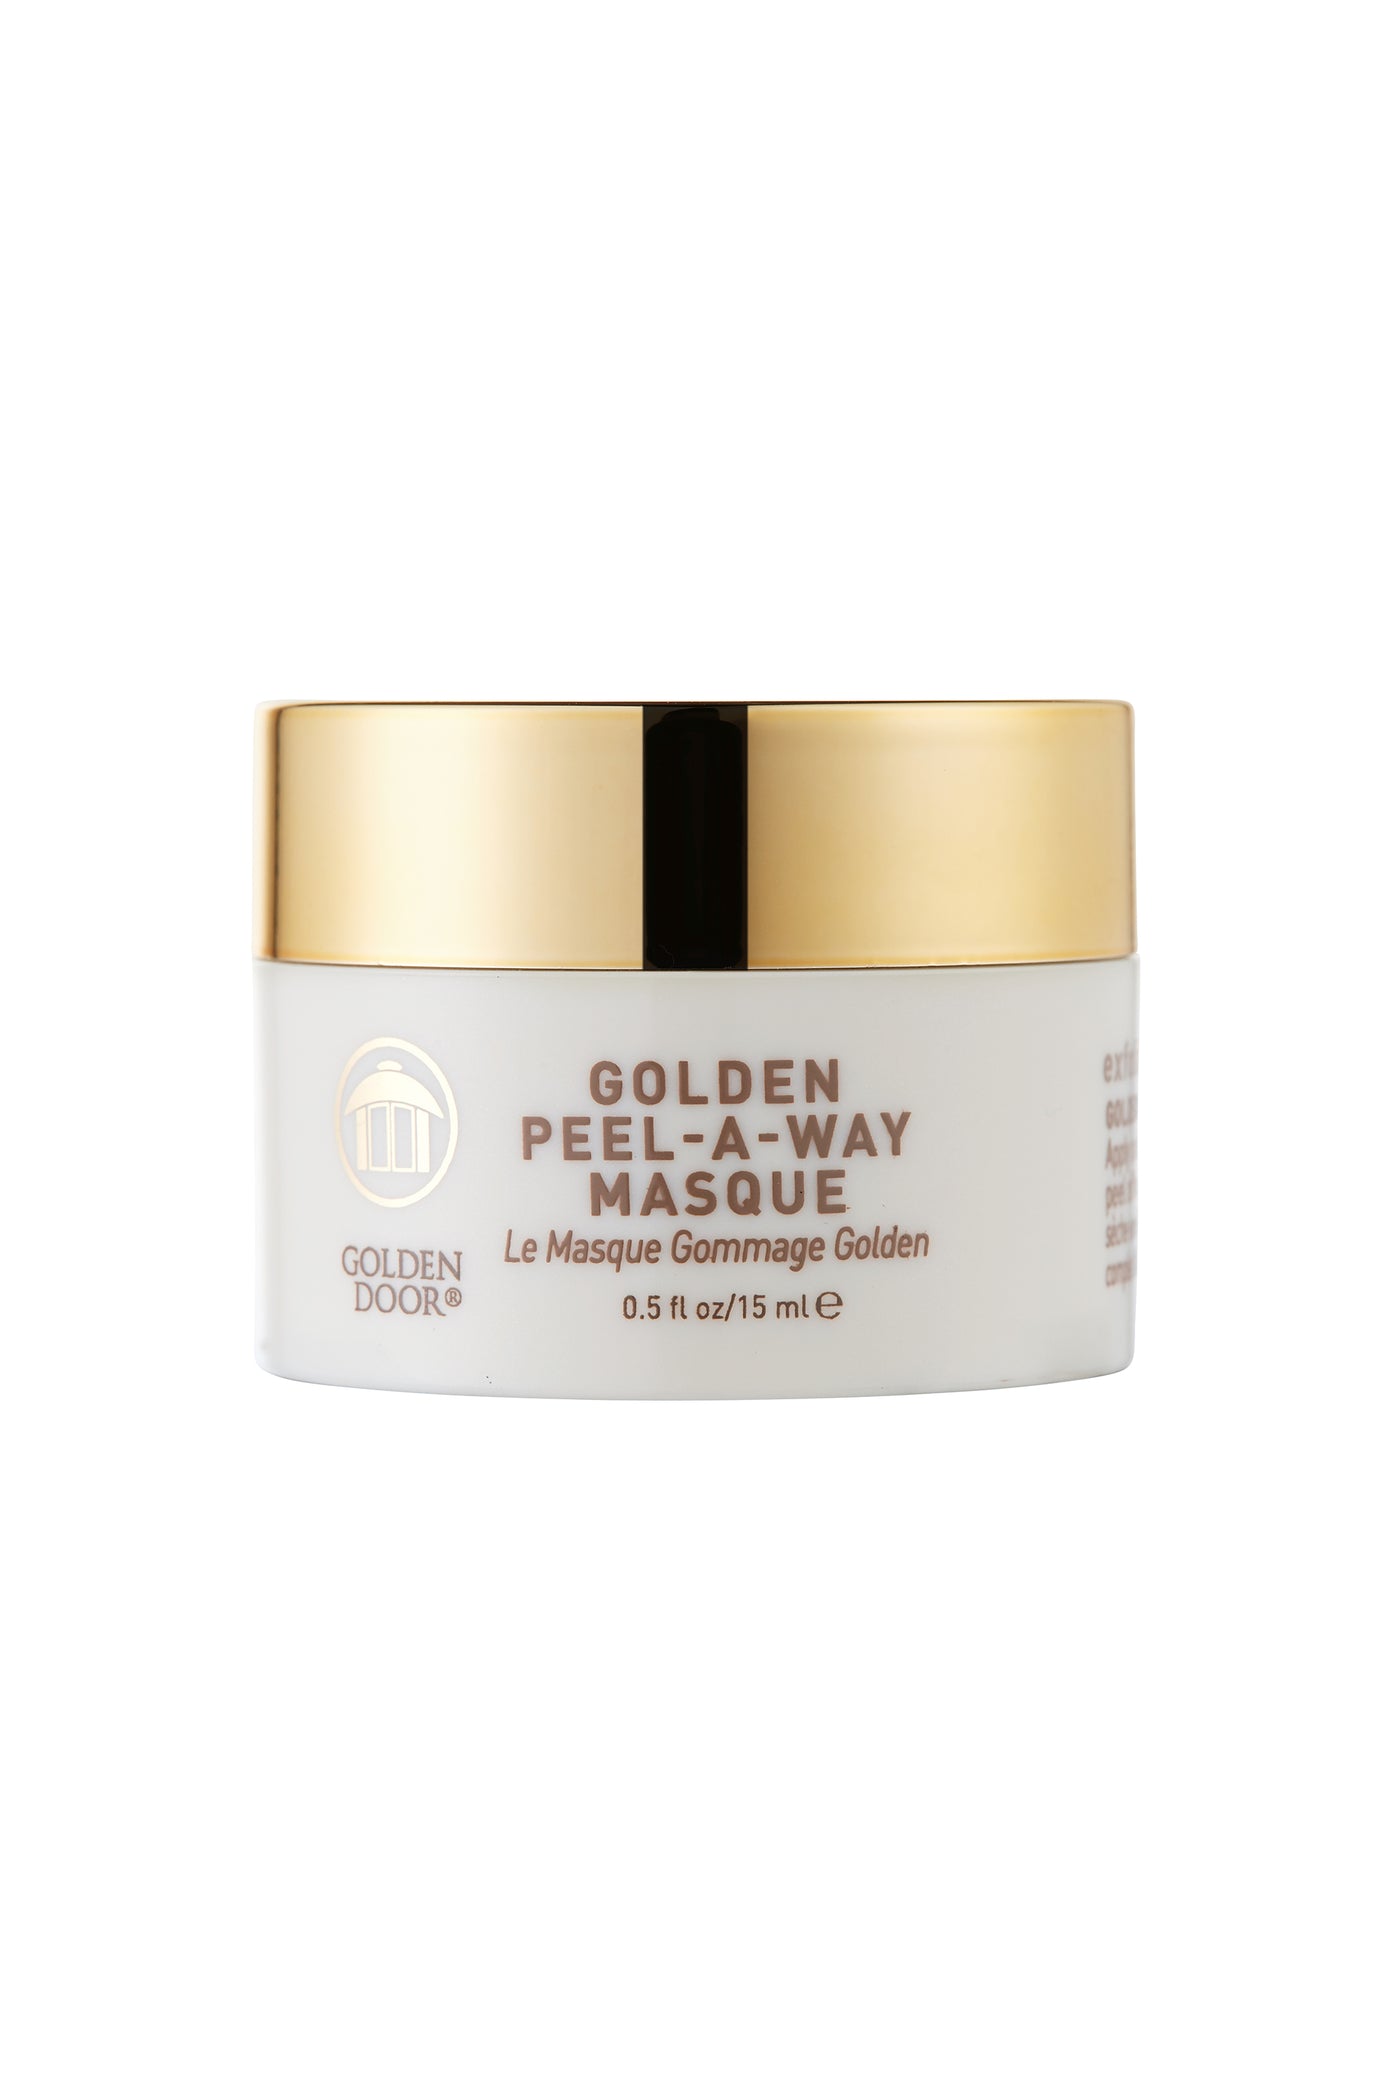 Golden Peel-A-Way Masque - travel